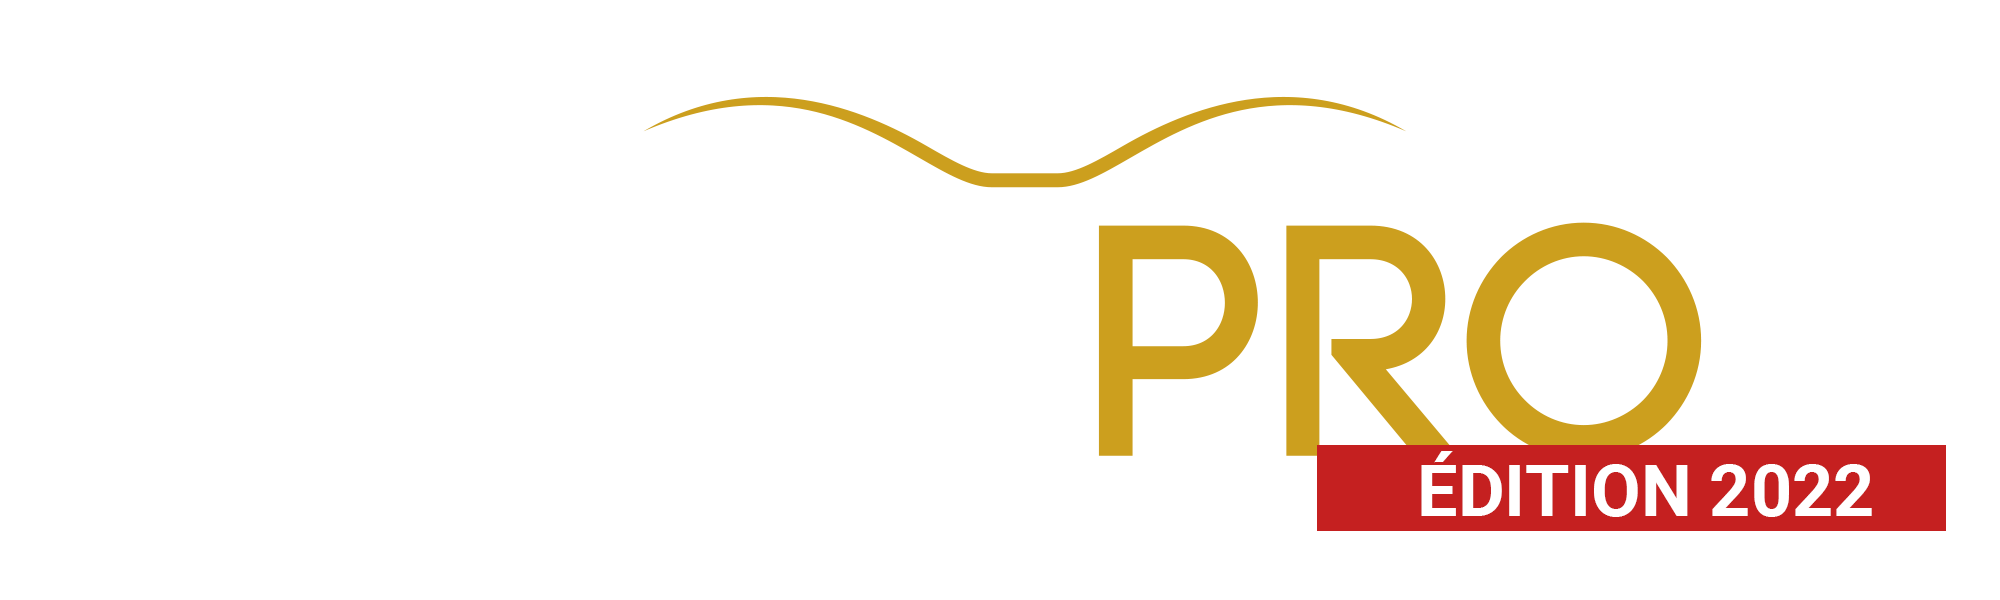 Logo de PokerPRO 2